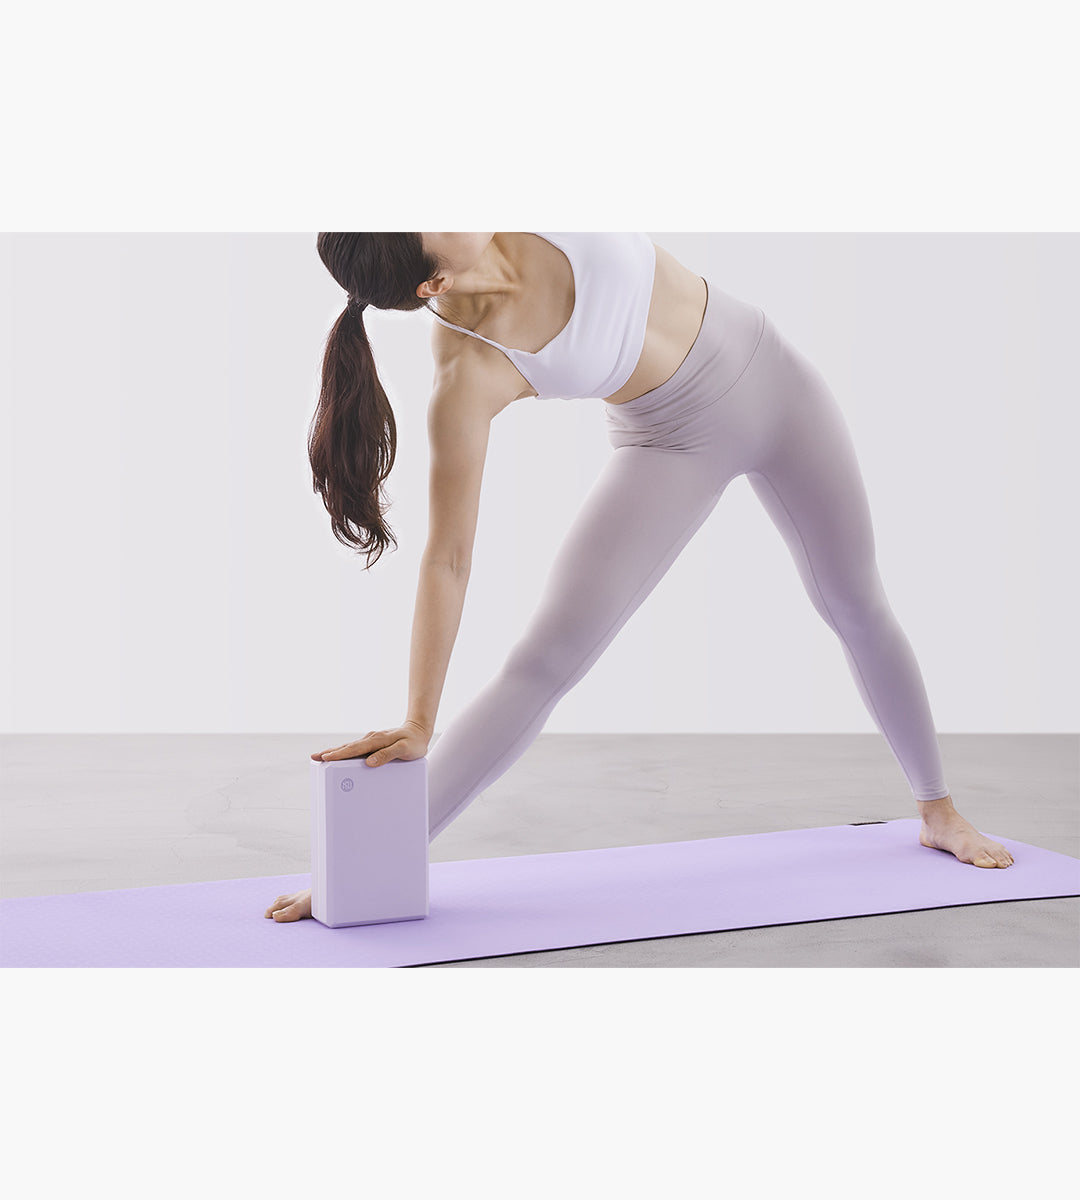 Yoga brick 45D (pink and purple)